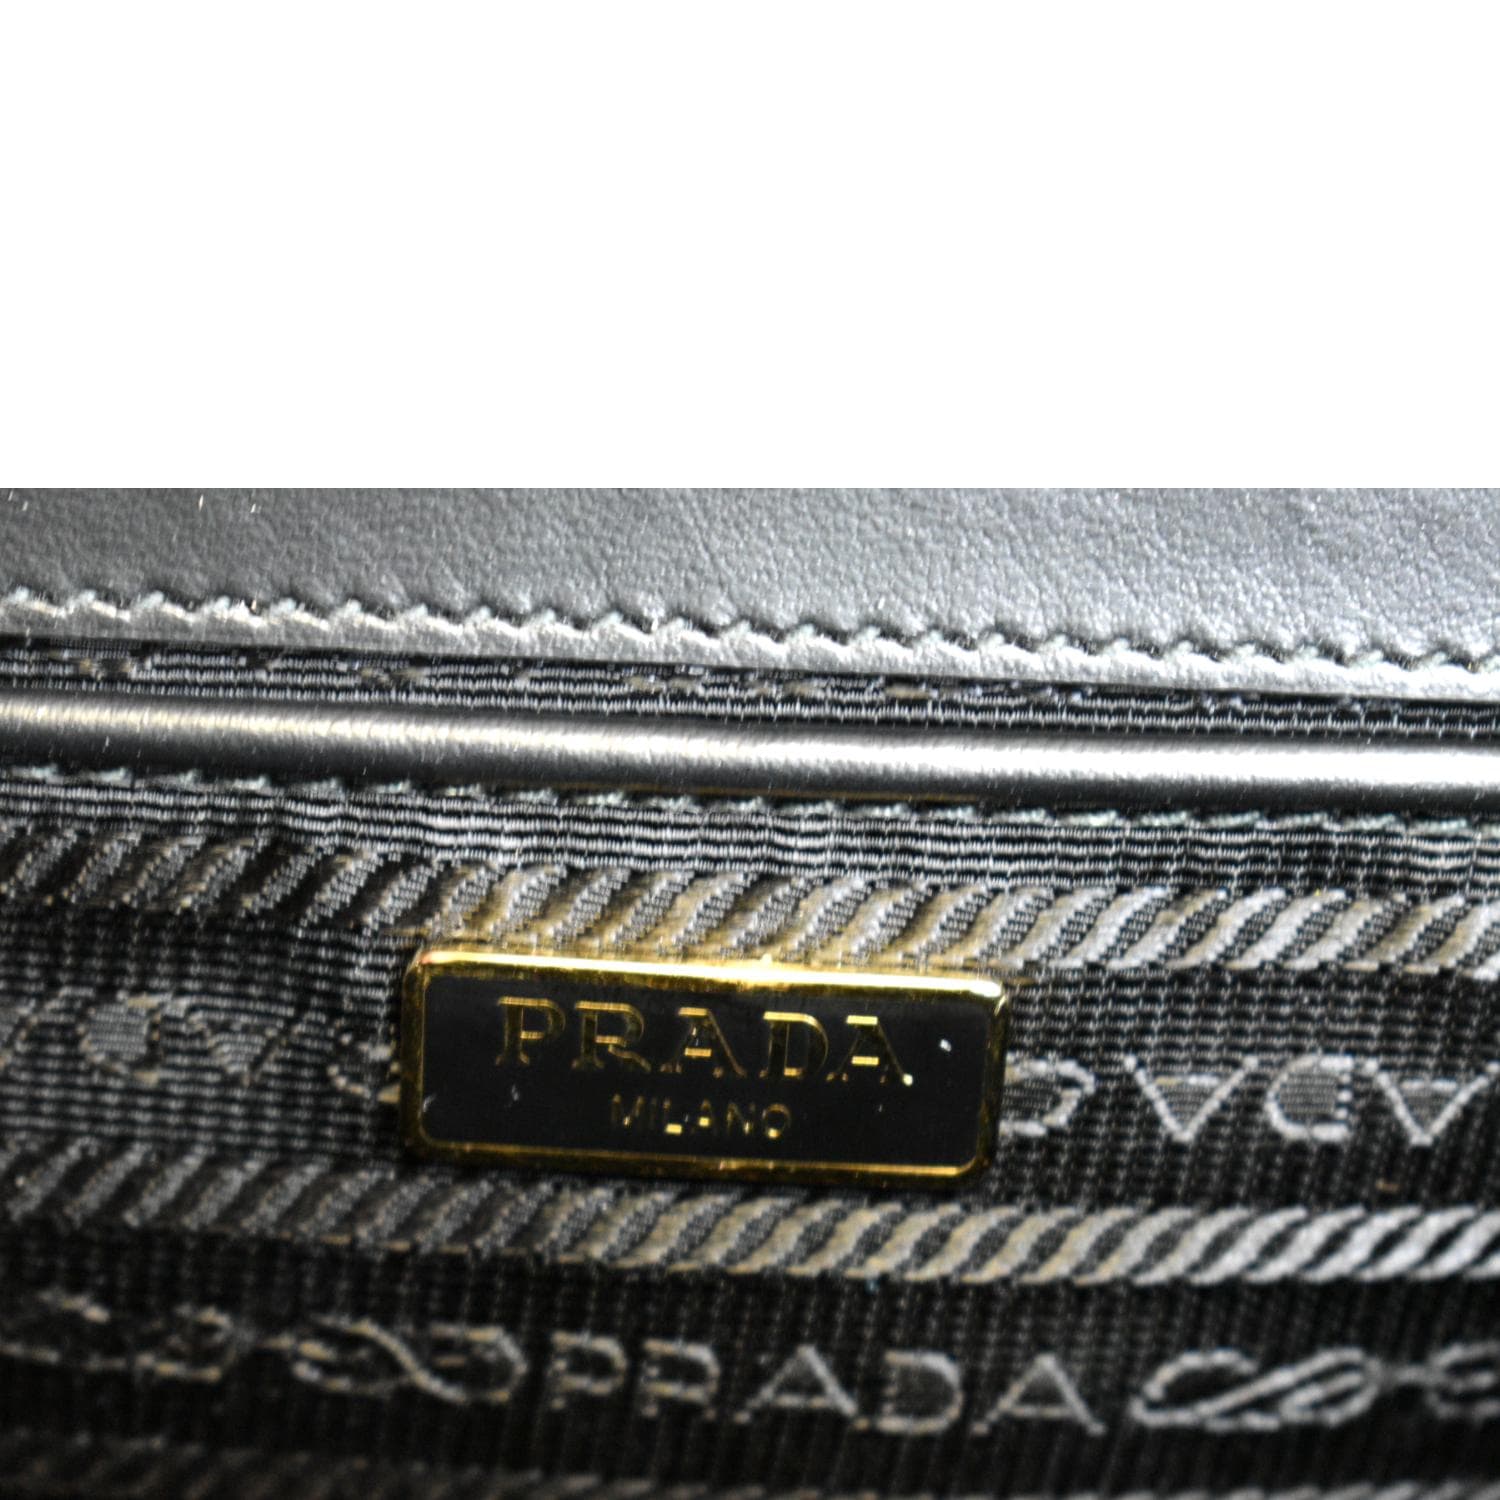 PRADA Saffiano Lux Leather Chain Shoulder Crossbody Bag - 15% OFF